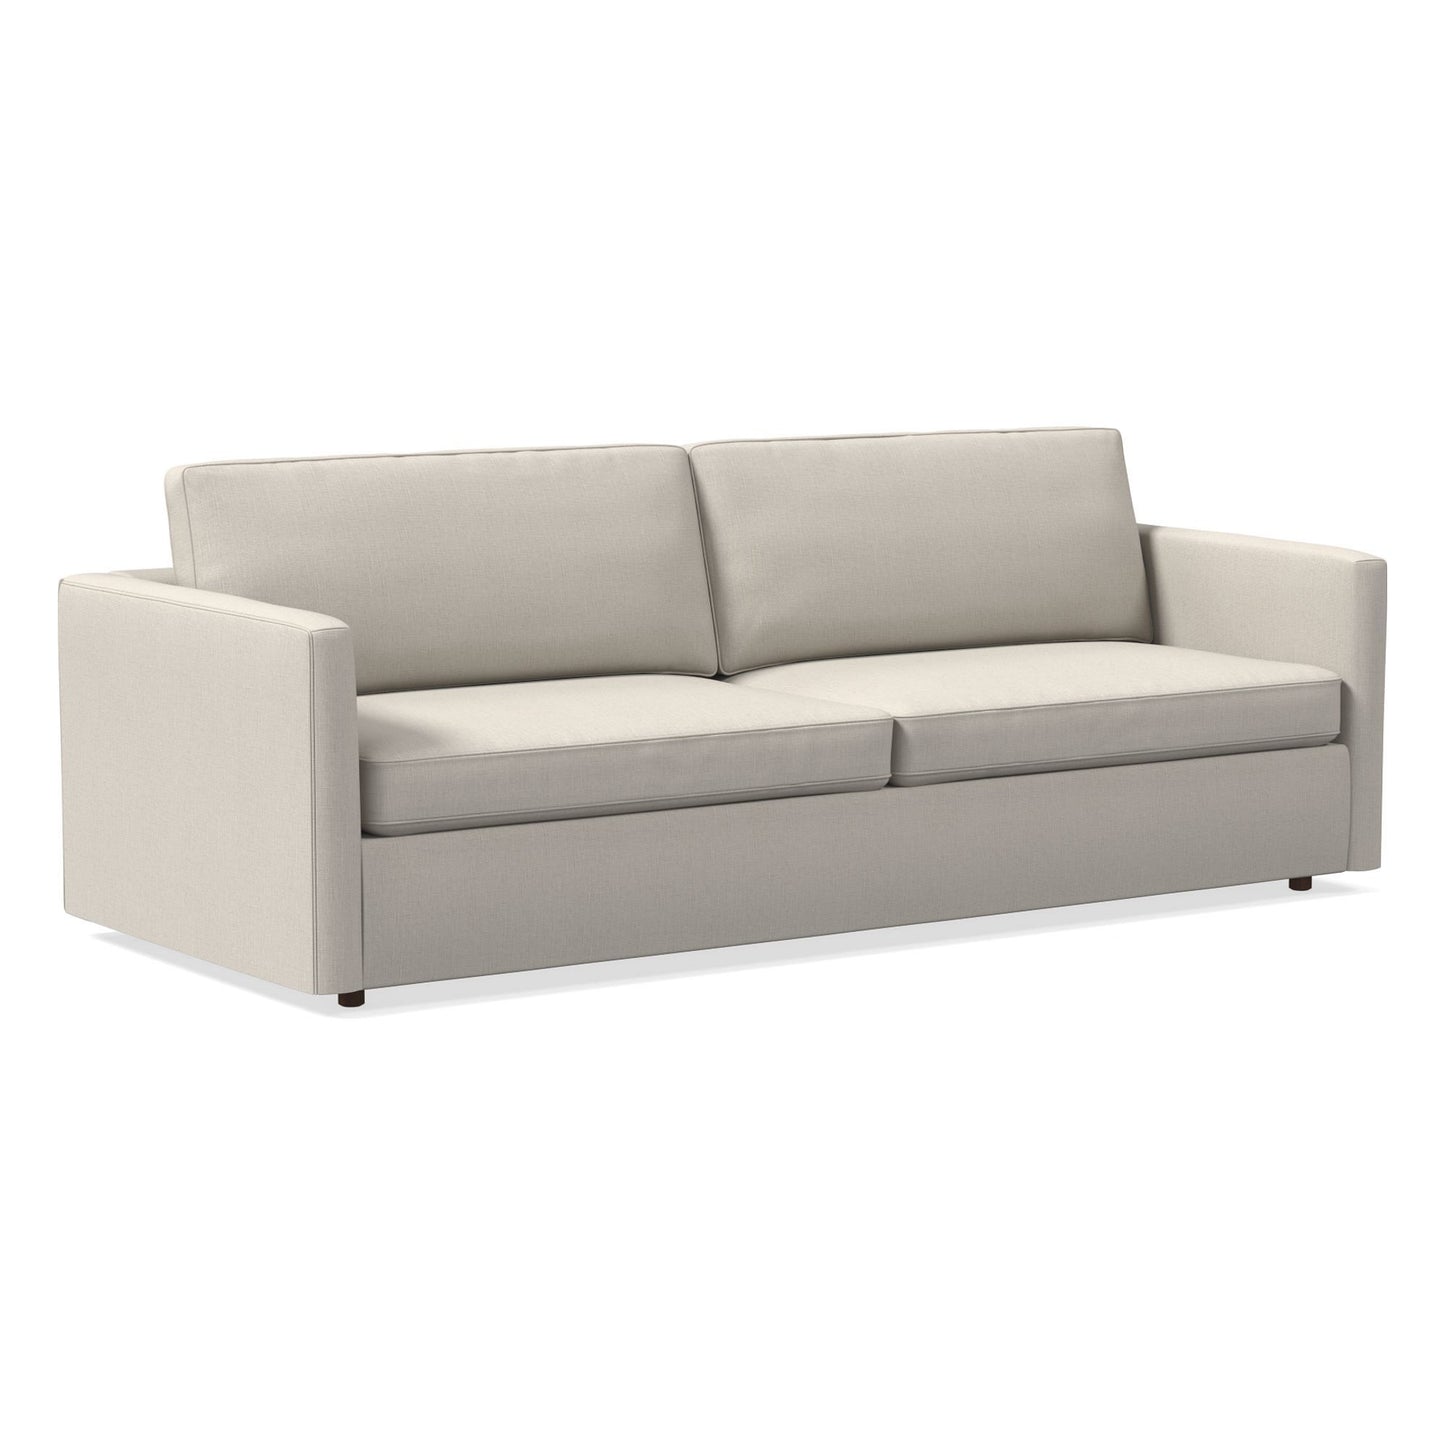 Beech wood sofa 85×200 cm-SBF64